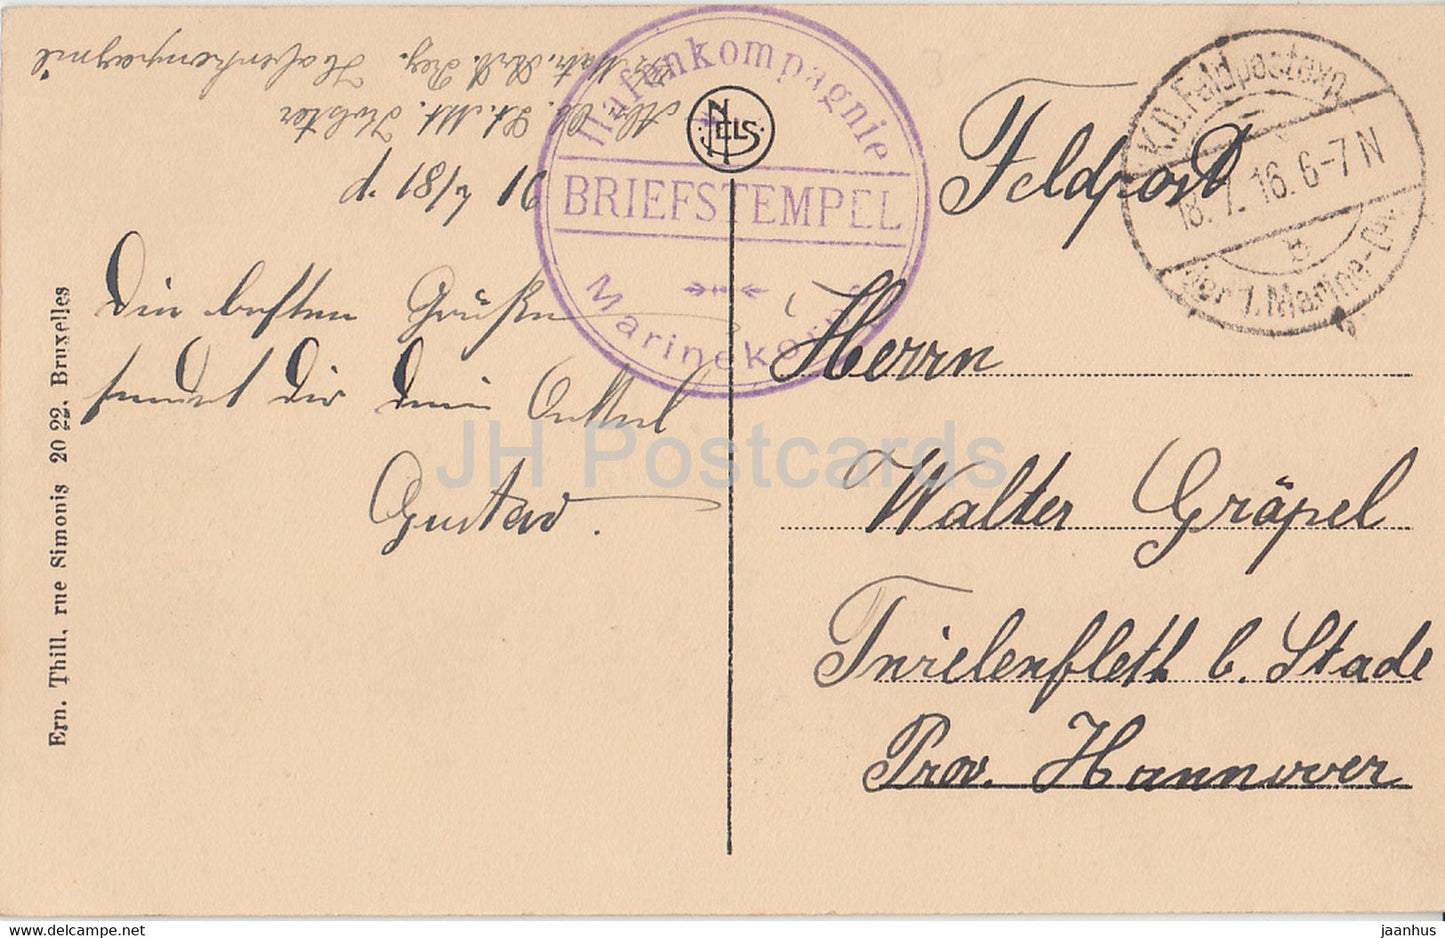 Oostende - Ostende - La Plage al heure des bains - Hafenkopagnie - Feldpost - alte Postkarte - 1916 - Belgien - gebraucht